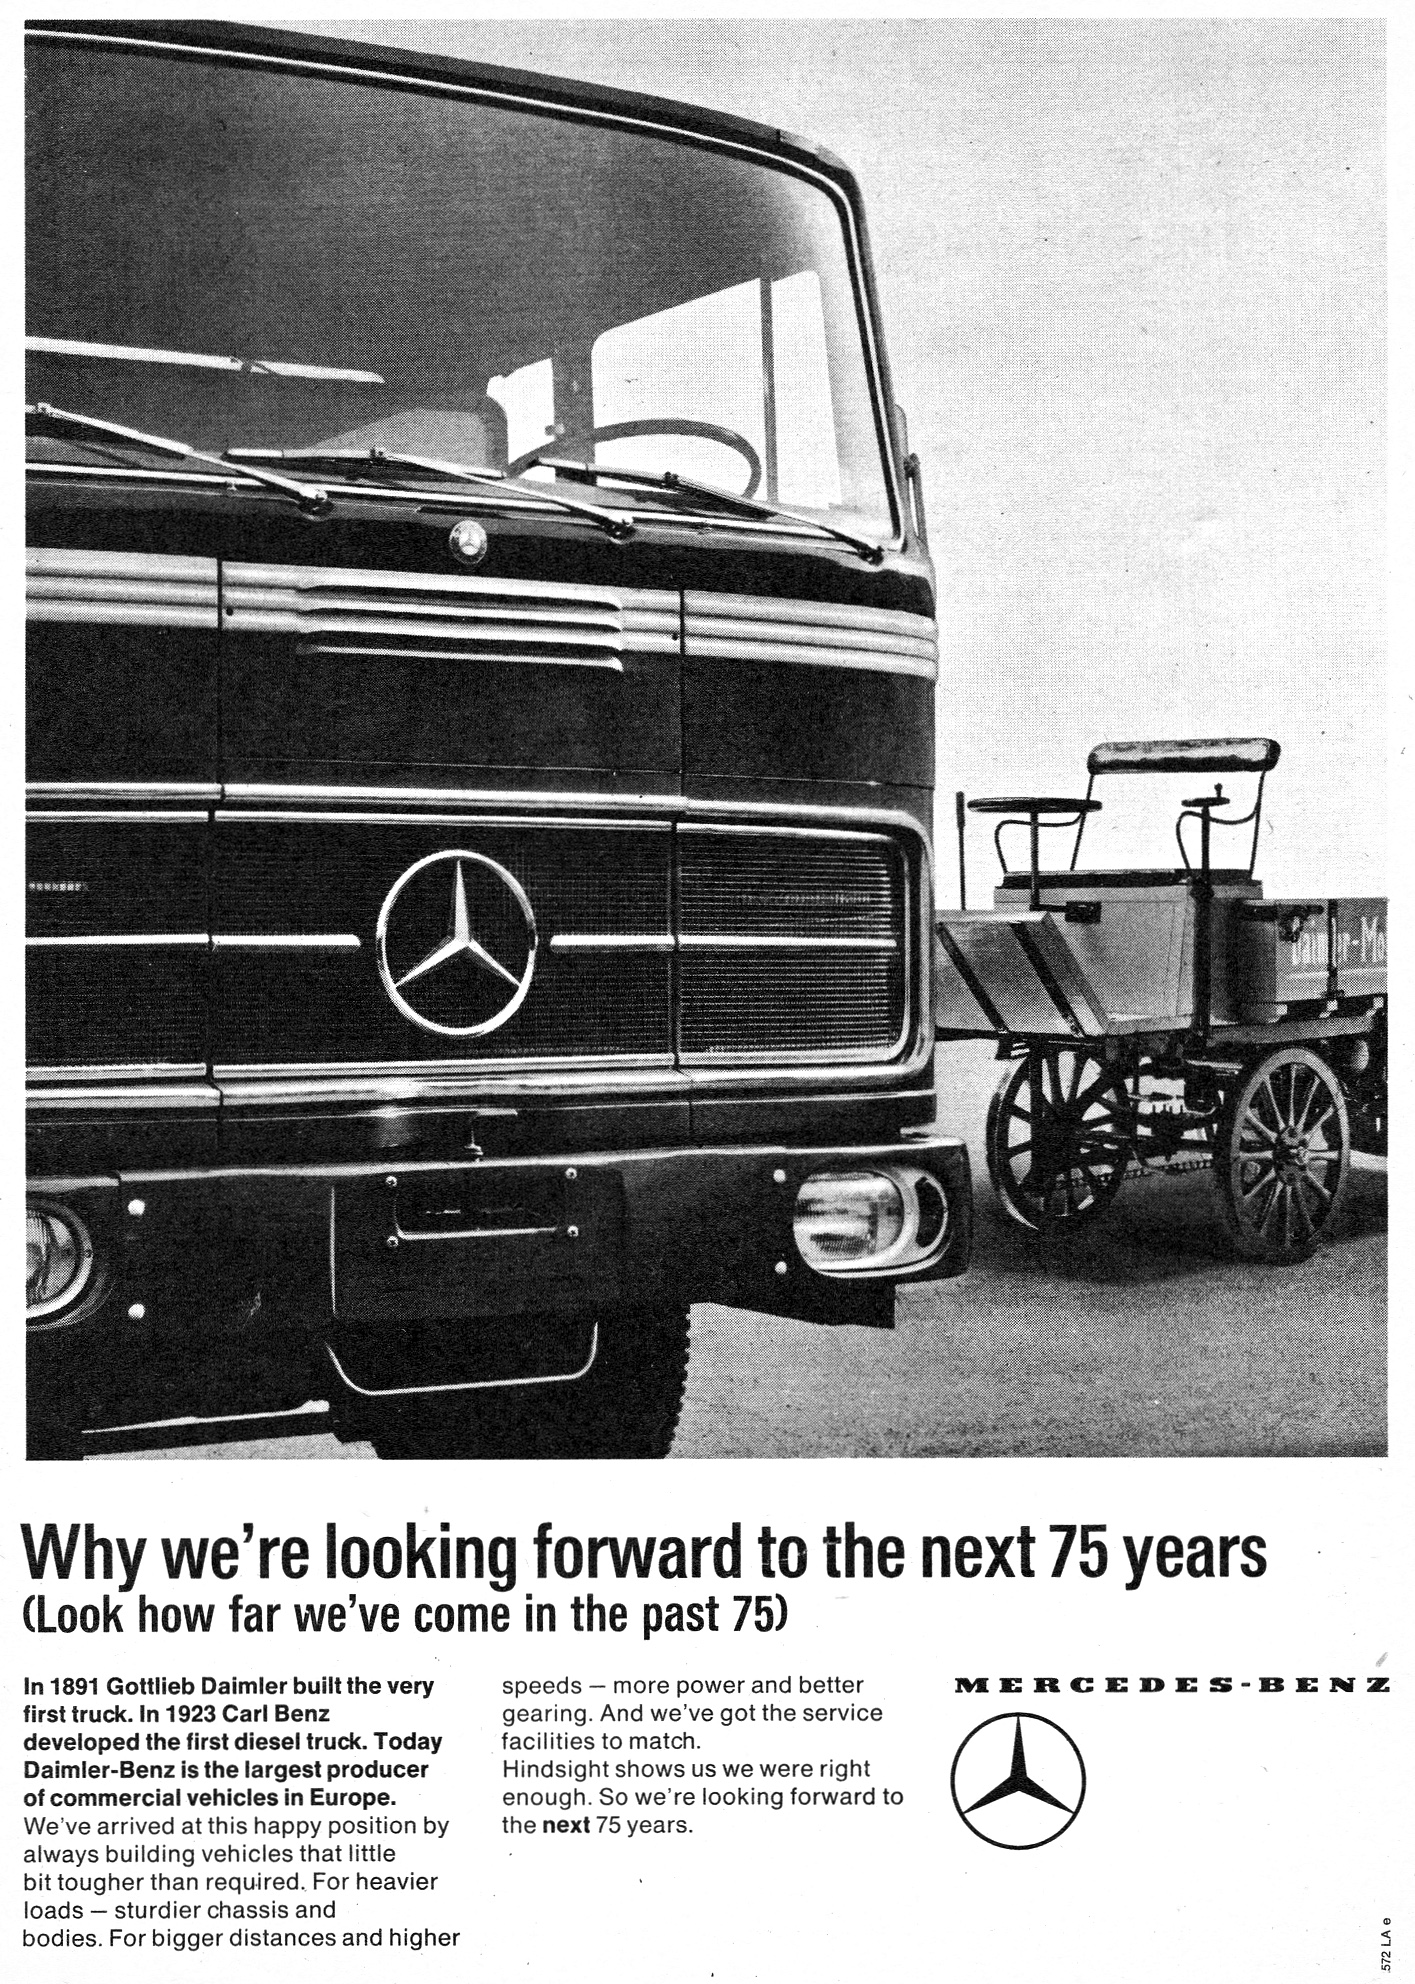 1965 Mercedes-Benz Truck The Next 75 Years